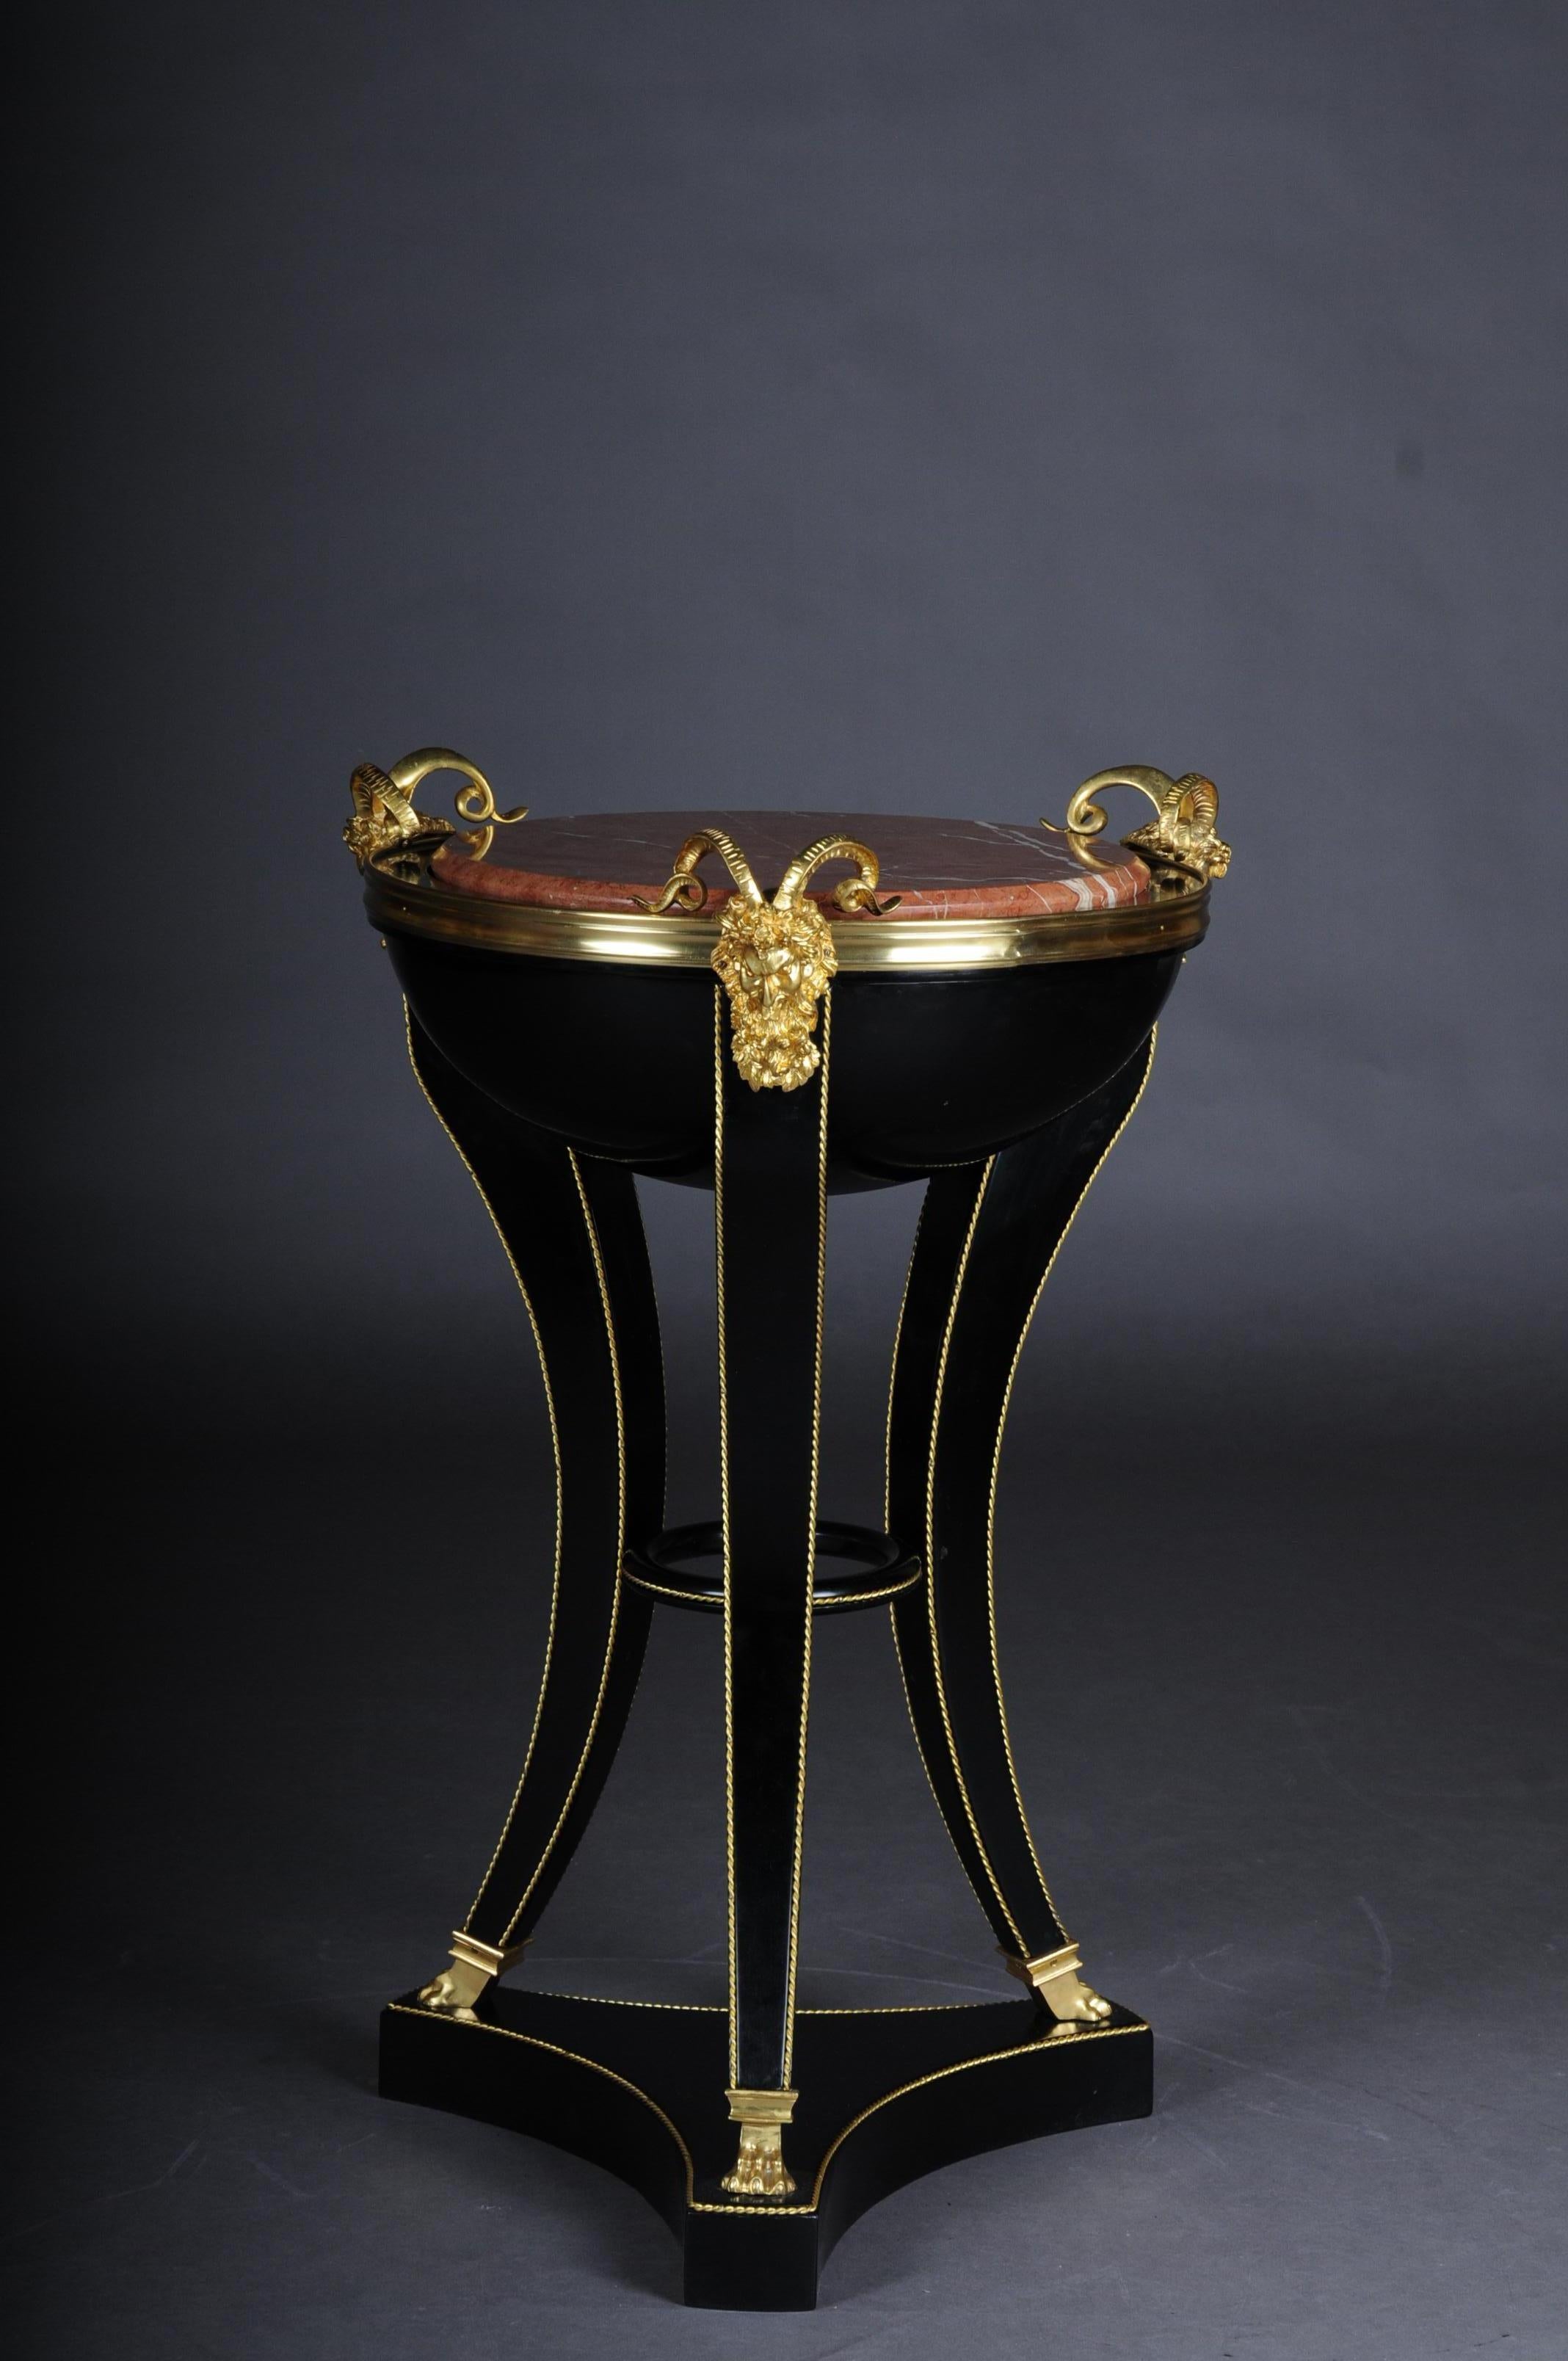 Unique Ebonized Side Table or Pillar in the Empire Style (Ebonisiert)